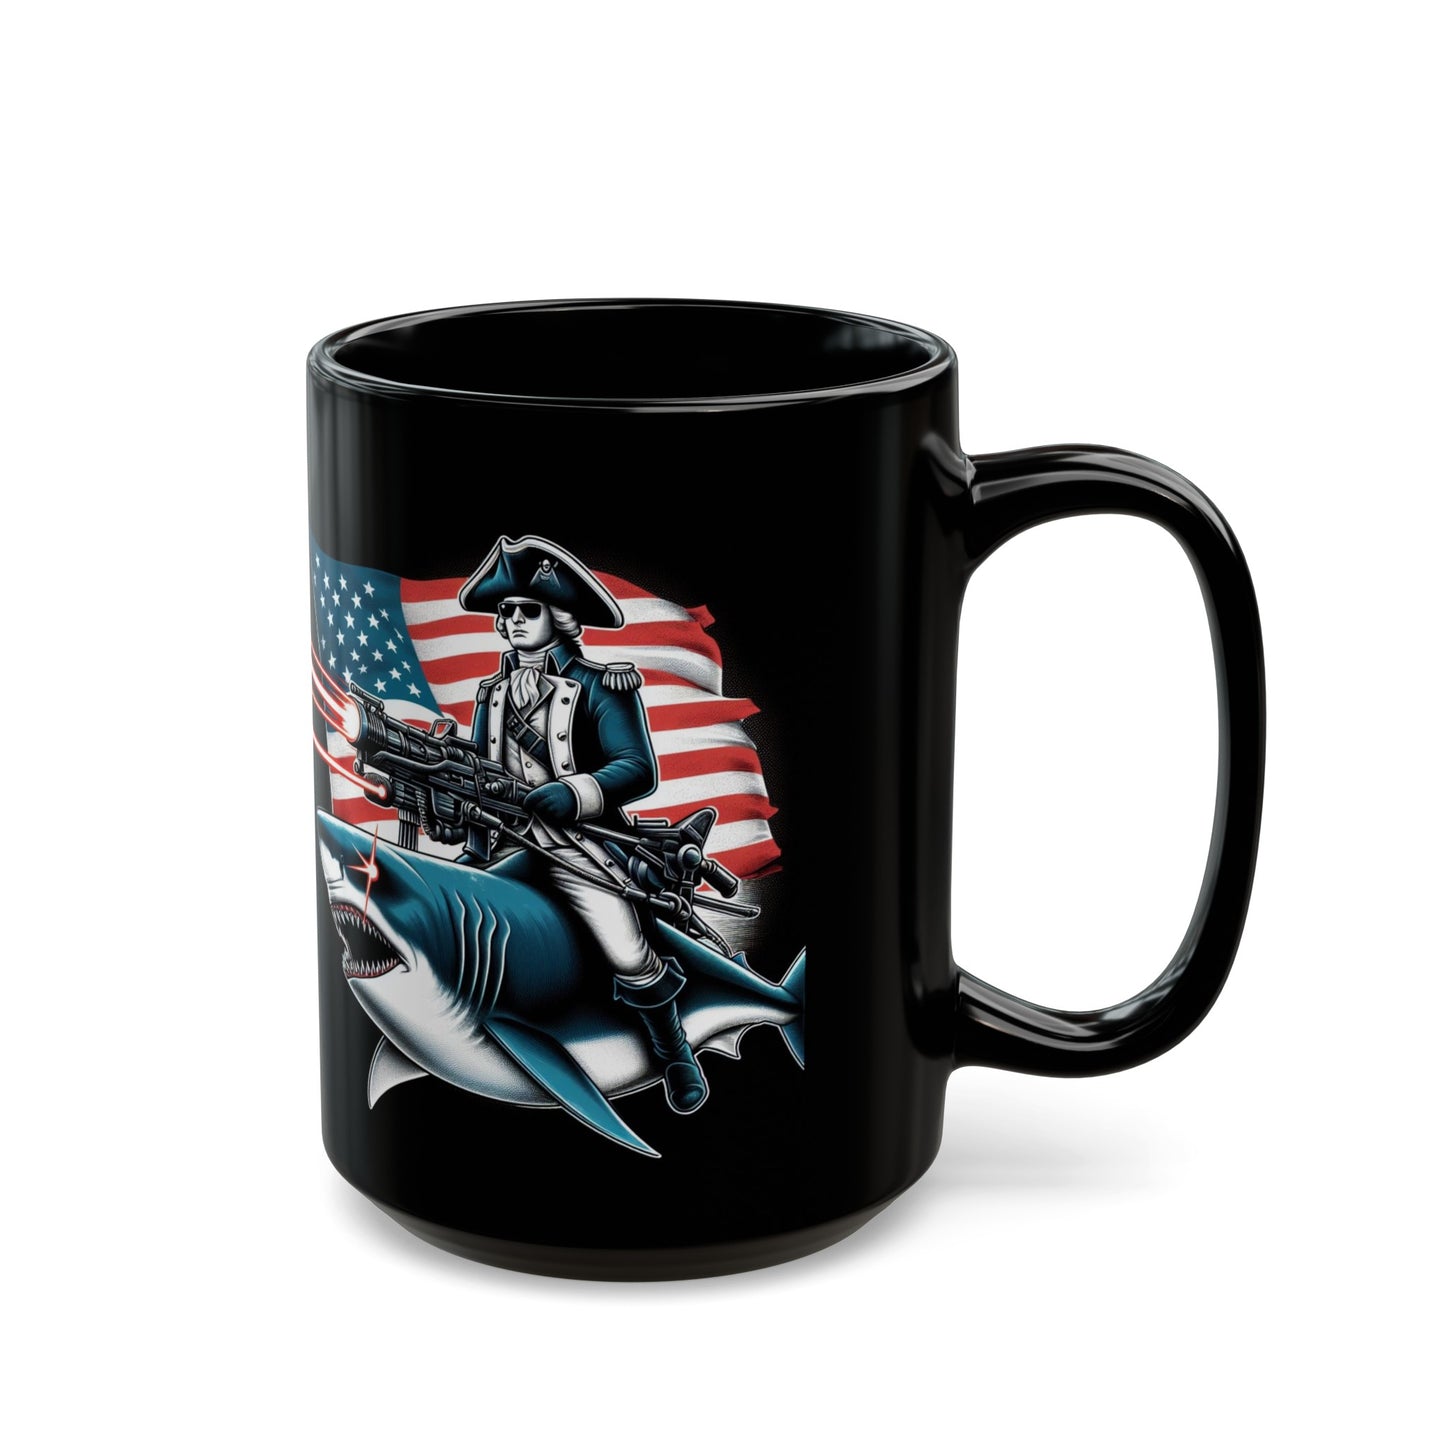 George Washington Riding a Laser Shark Coffee Mug